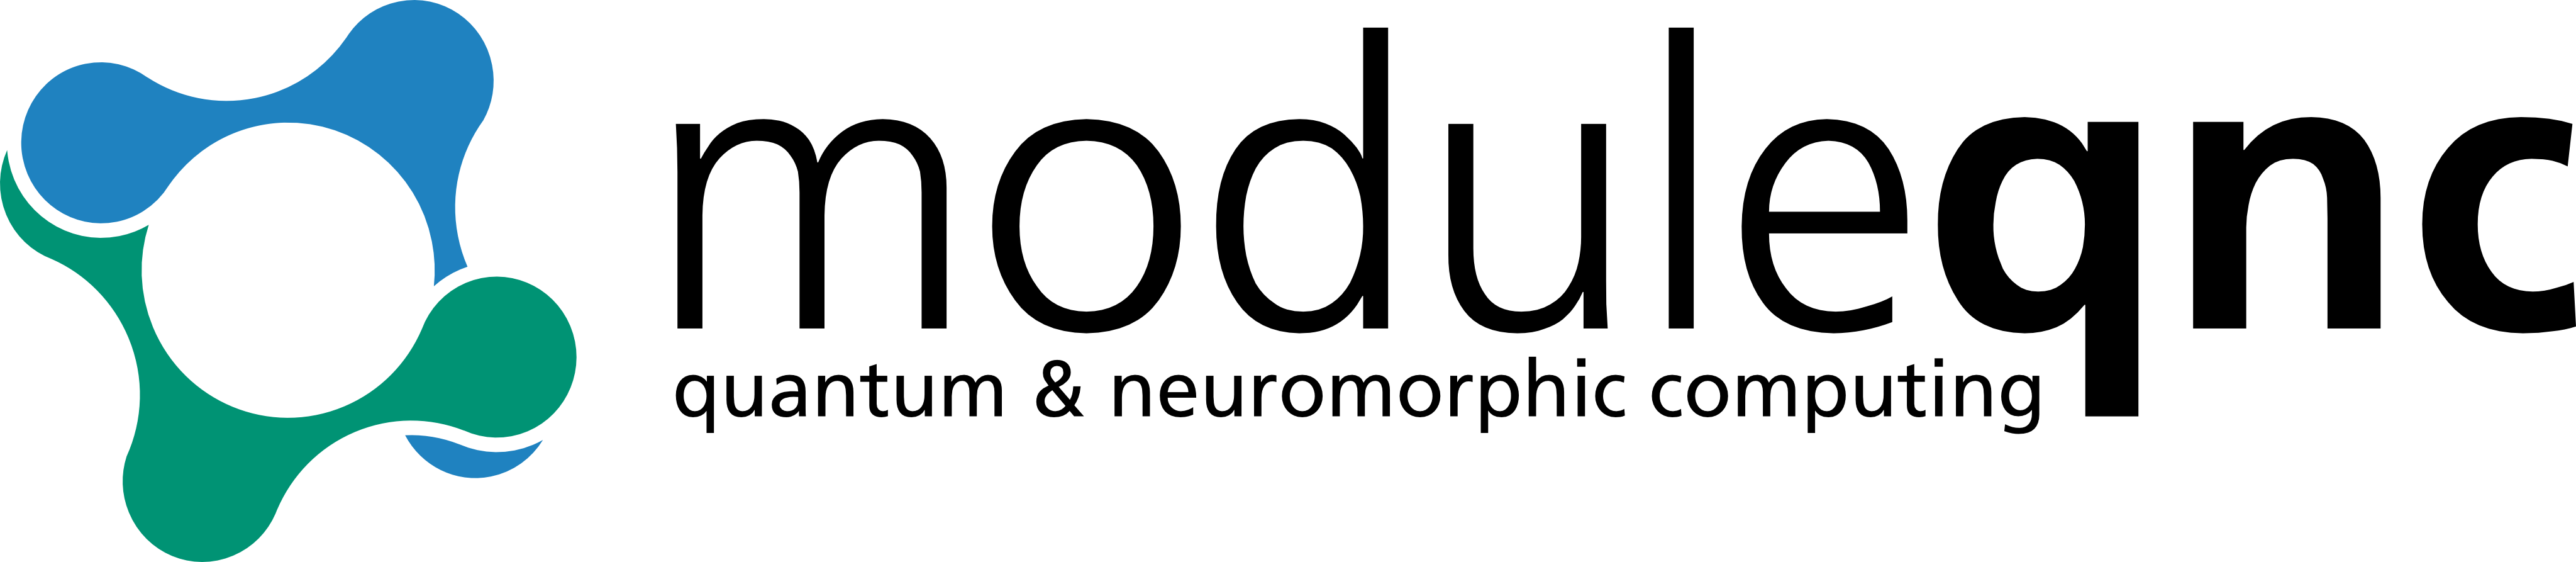 logo image - module qnc